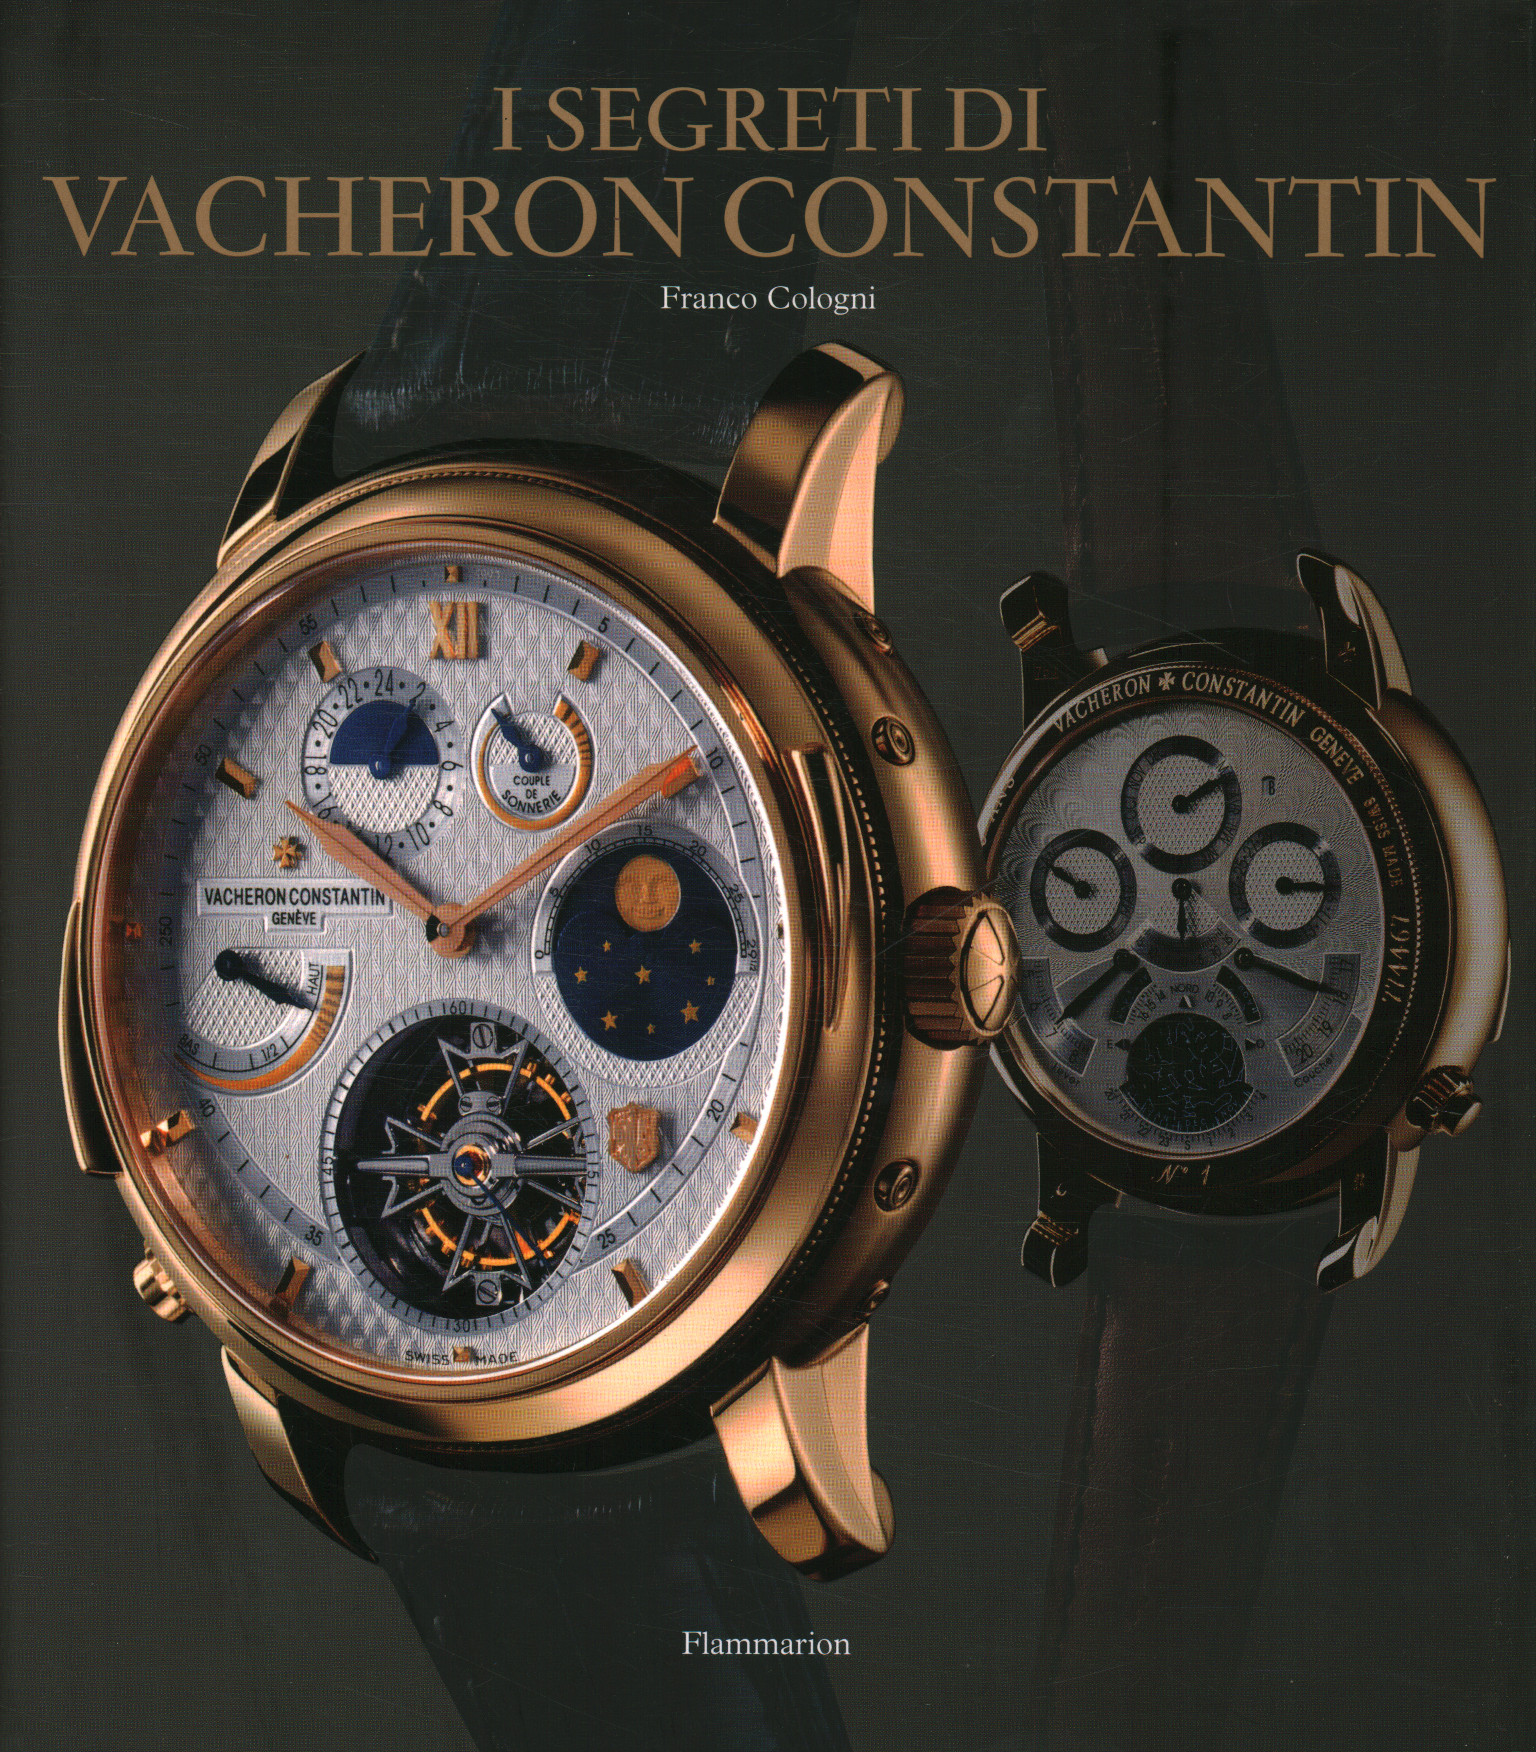 The secrets of Vacheron Constantin